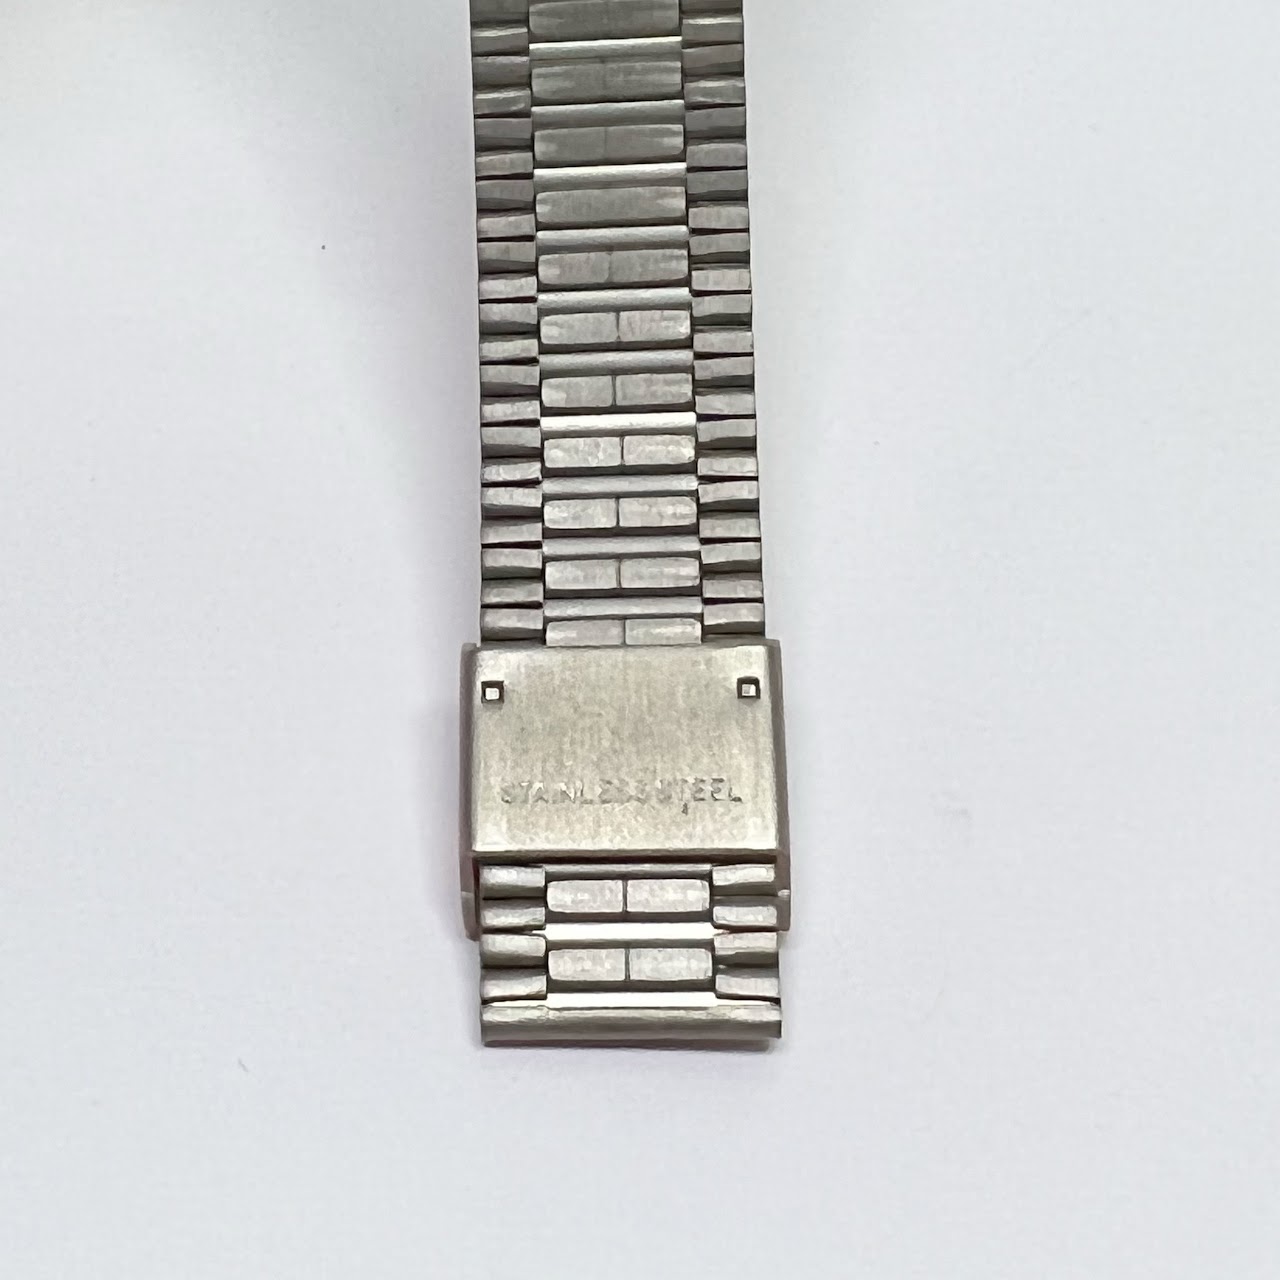 Nicolai Canetti Pink Memphis-Style Vintage Wristwatch